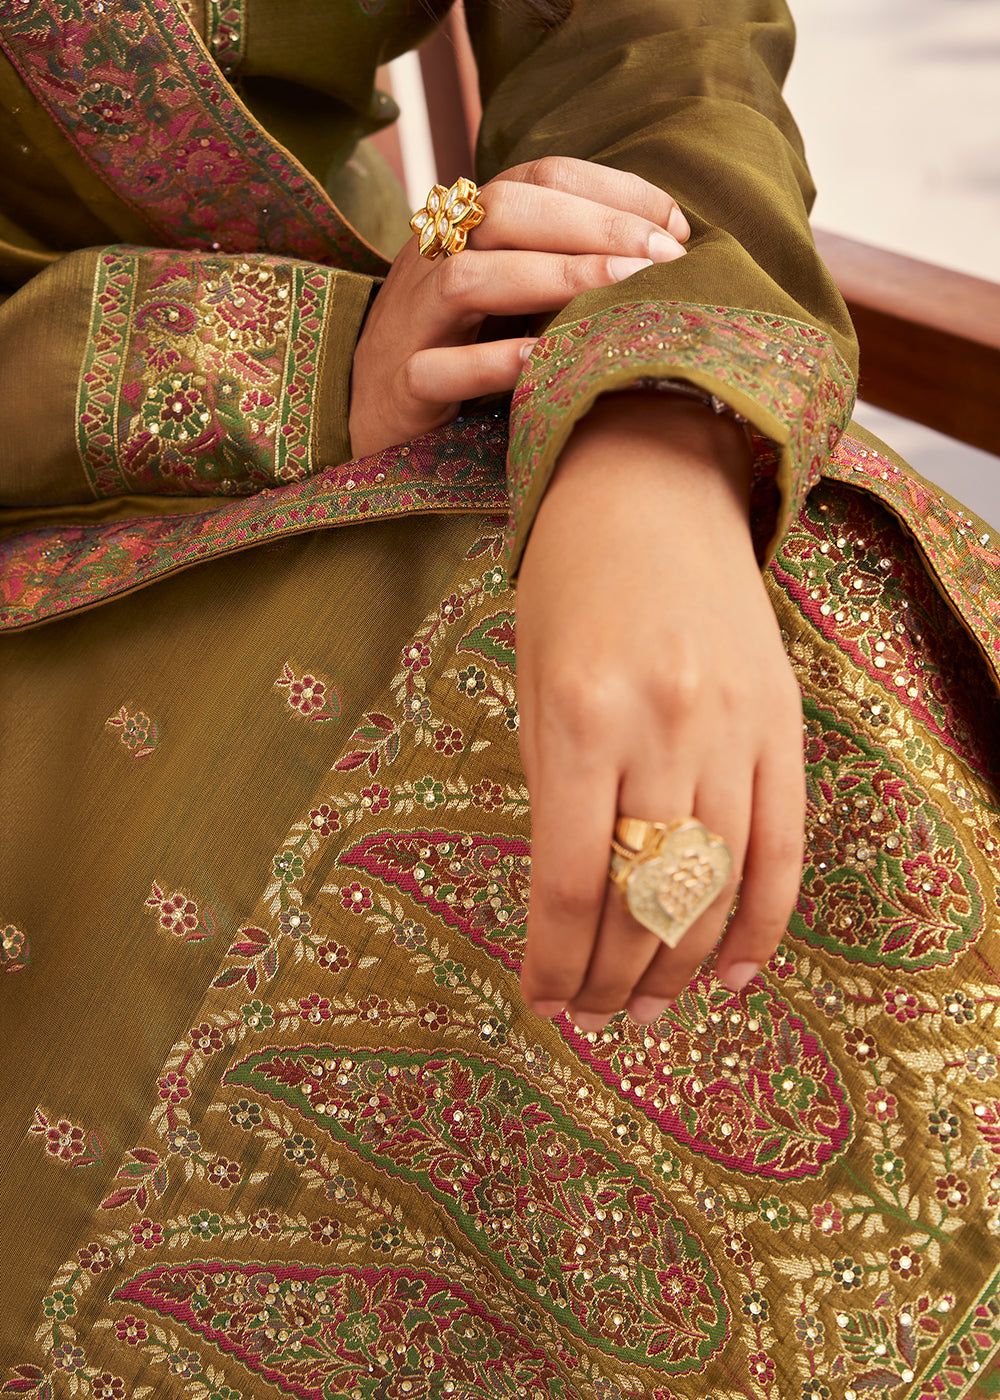 Buy Now Khaki Jacquard Embordered Festive Pant Salwar Suit Online in USA, UK, Canada & Worldwide at Empress Clothing. 